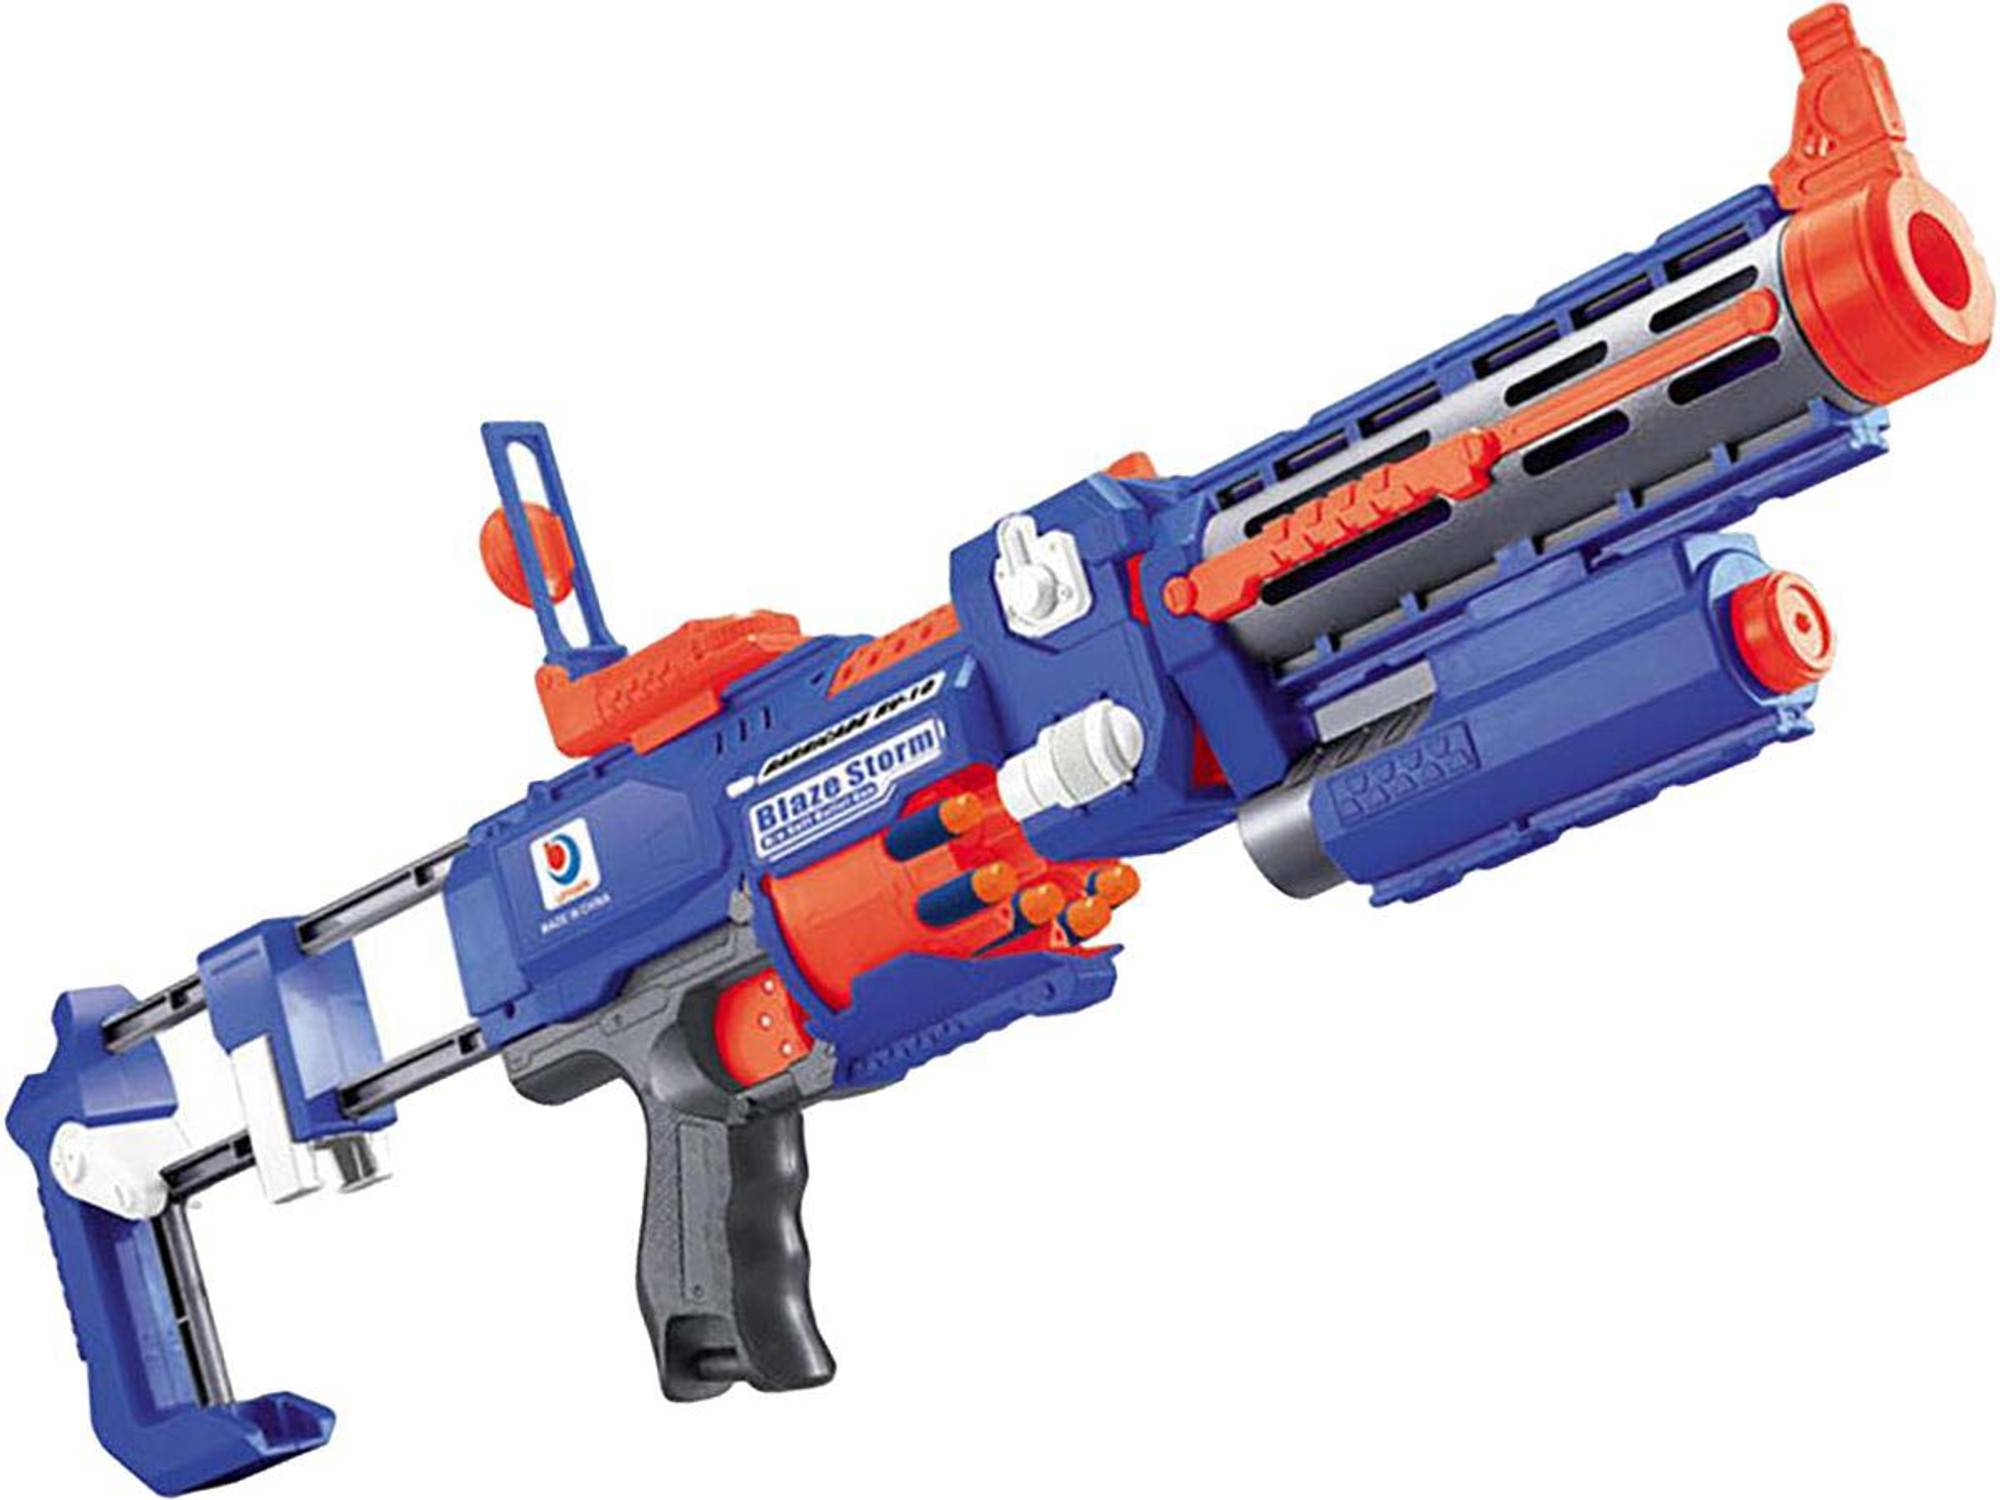 Blaze Storm Foam Blaster Full Auto Electric Foam Blaster Rifle with Drum Mag & Laser (Model: Blue)